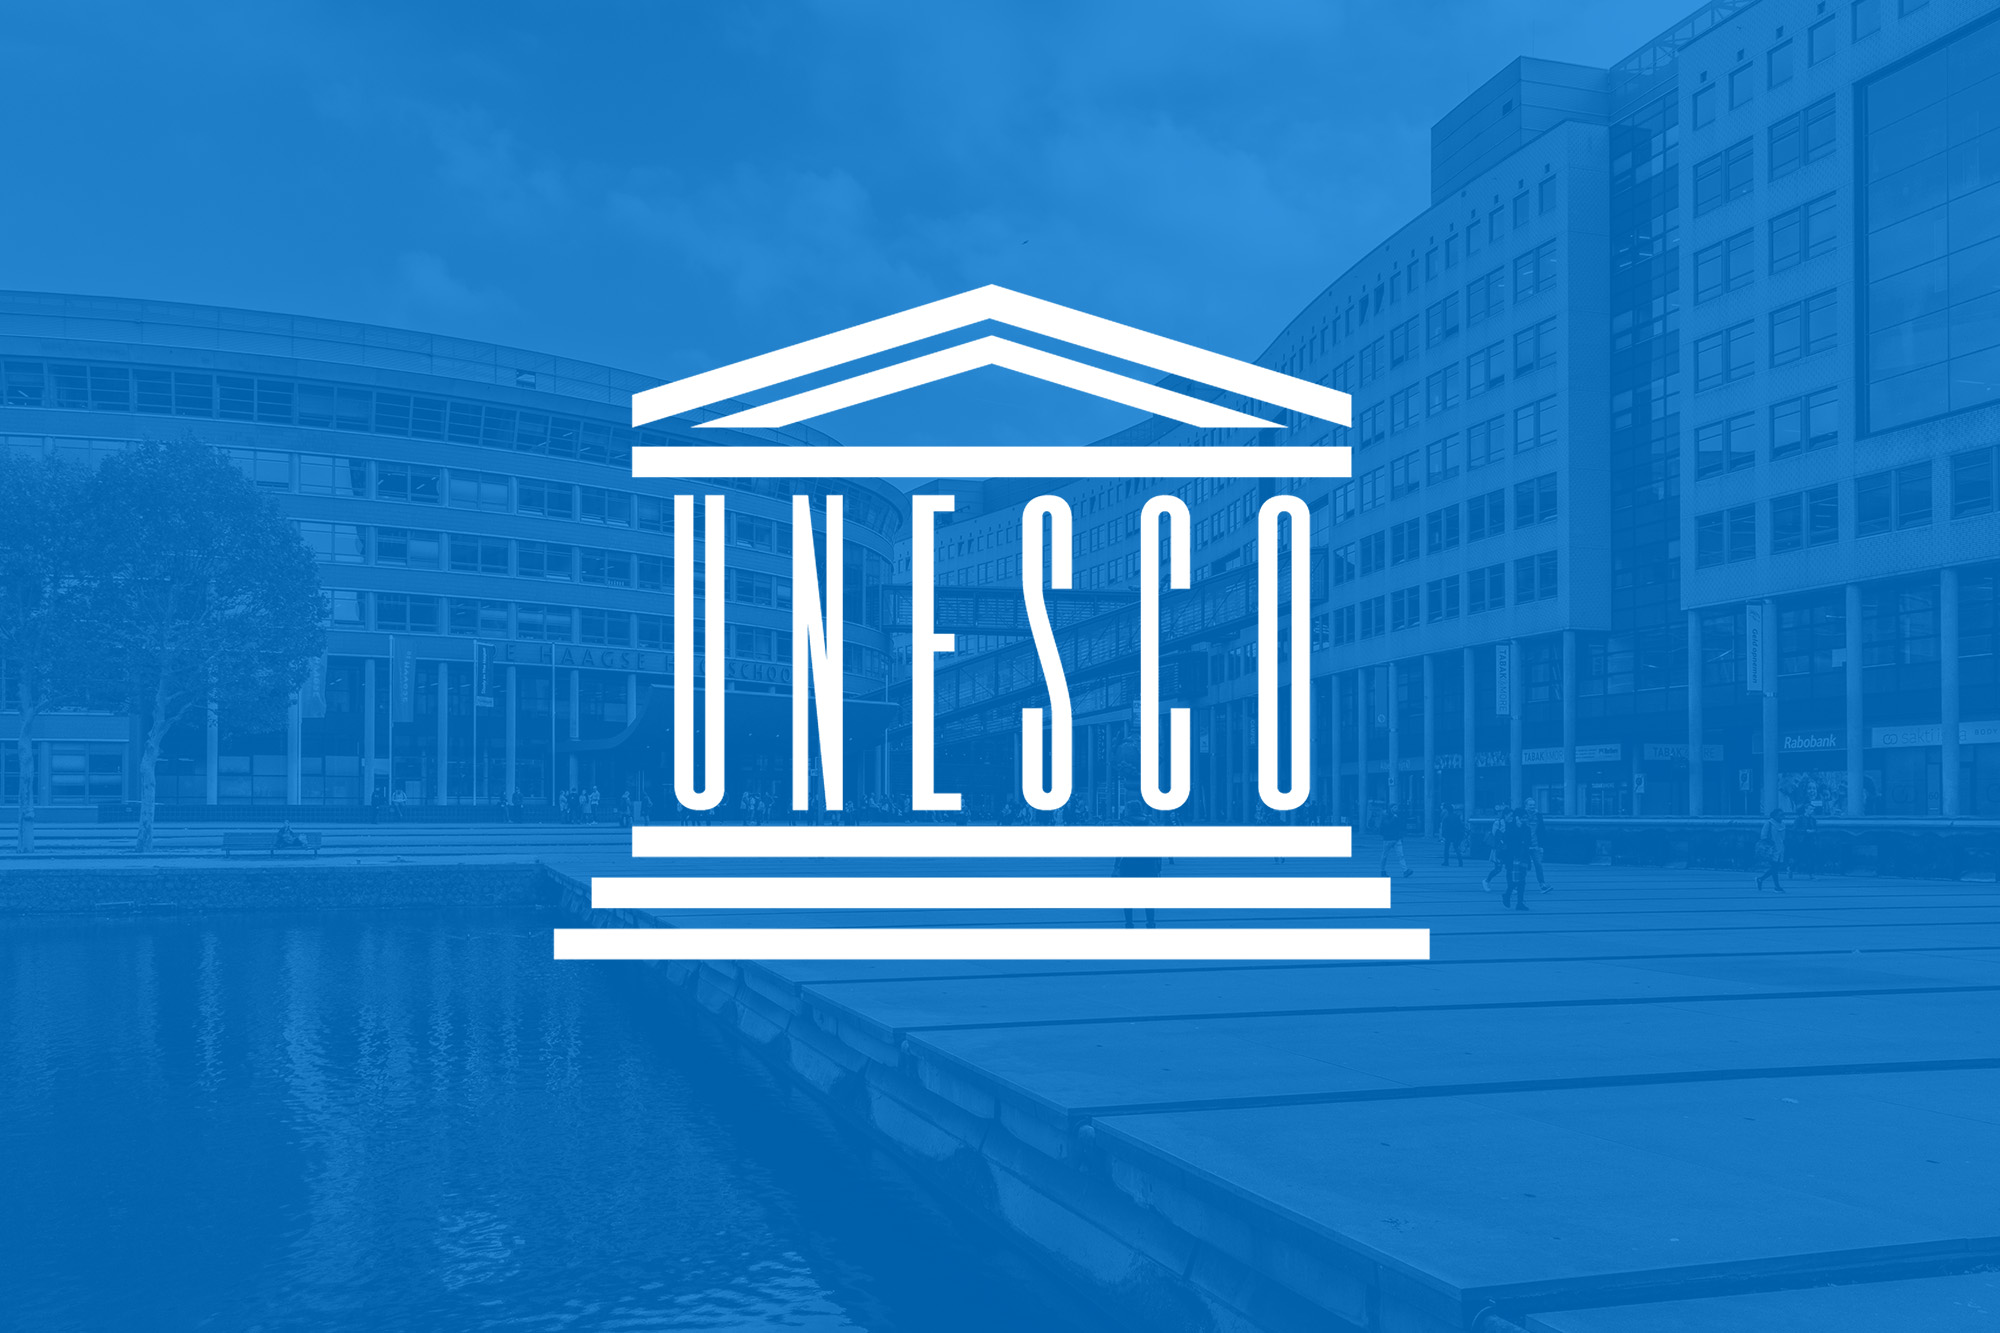 HHs Unesco school logo